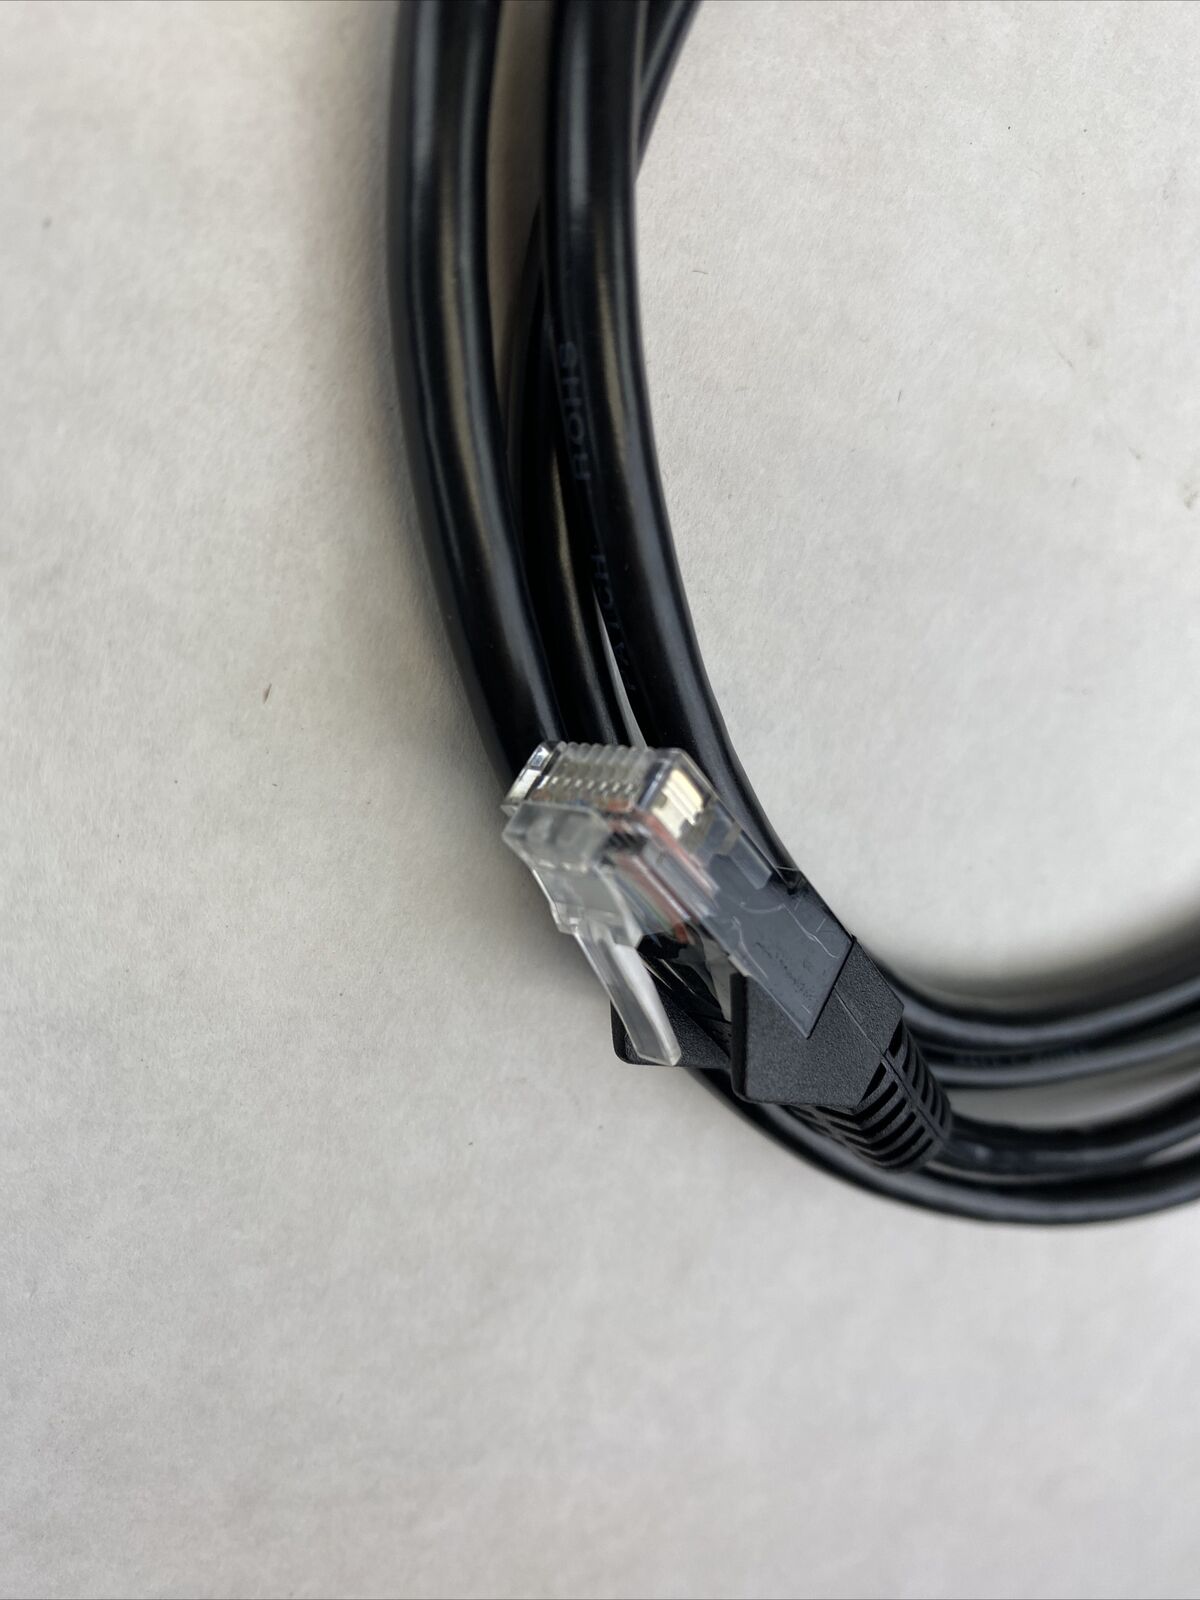 Lot of 5 Tripp Lite N001-005-BK Cat5e 350MHz Snagless cables (RJ45 M/M) 5ft